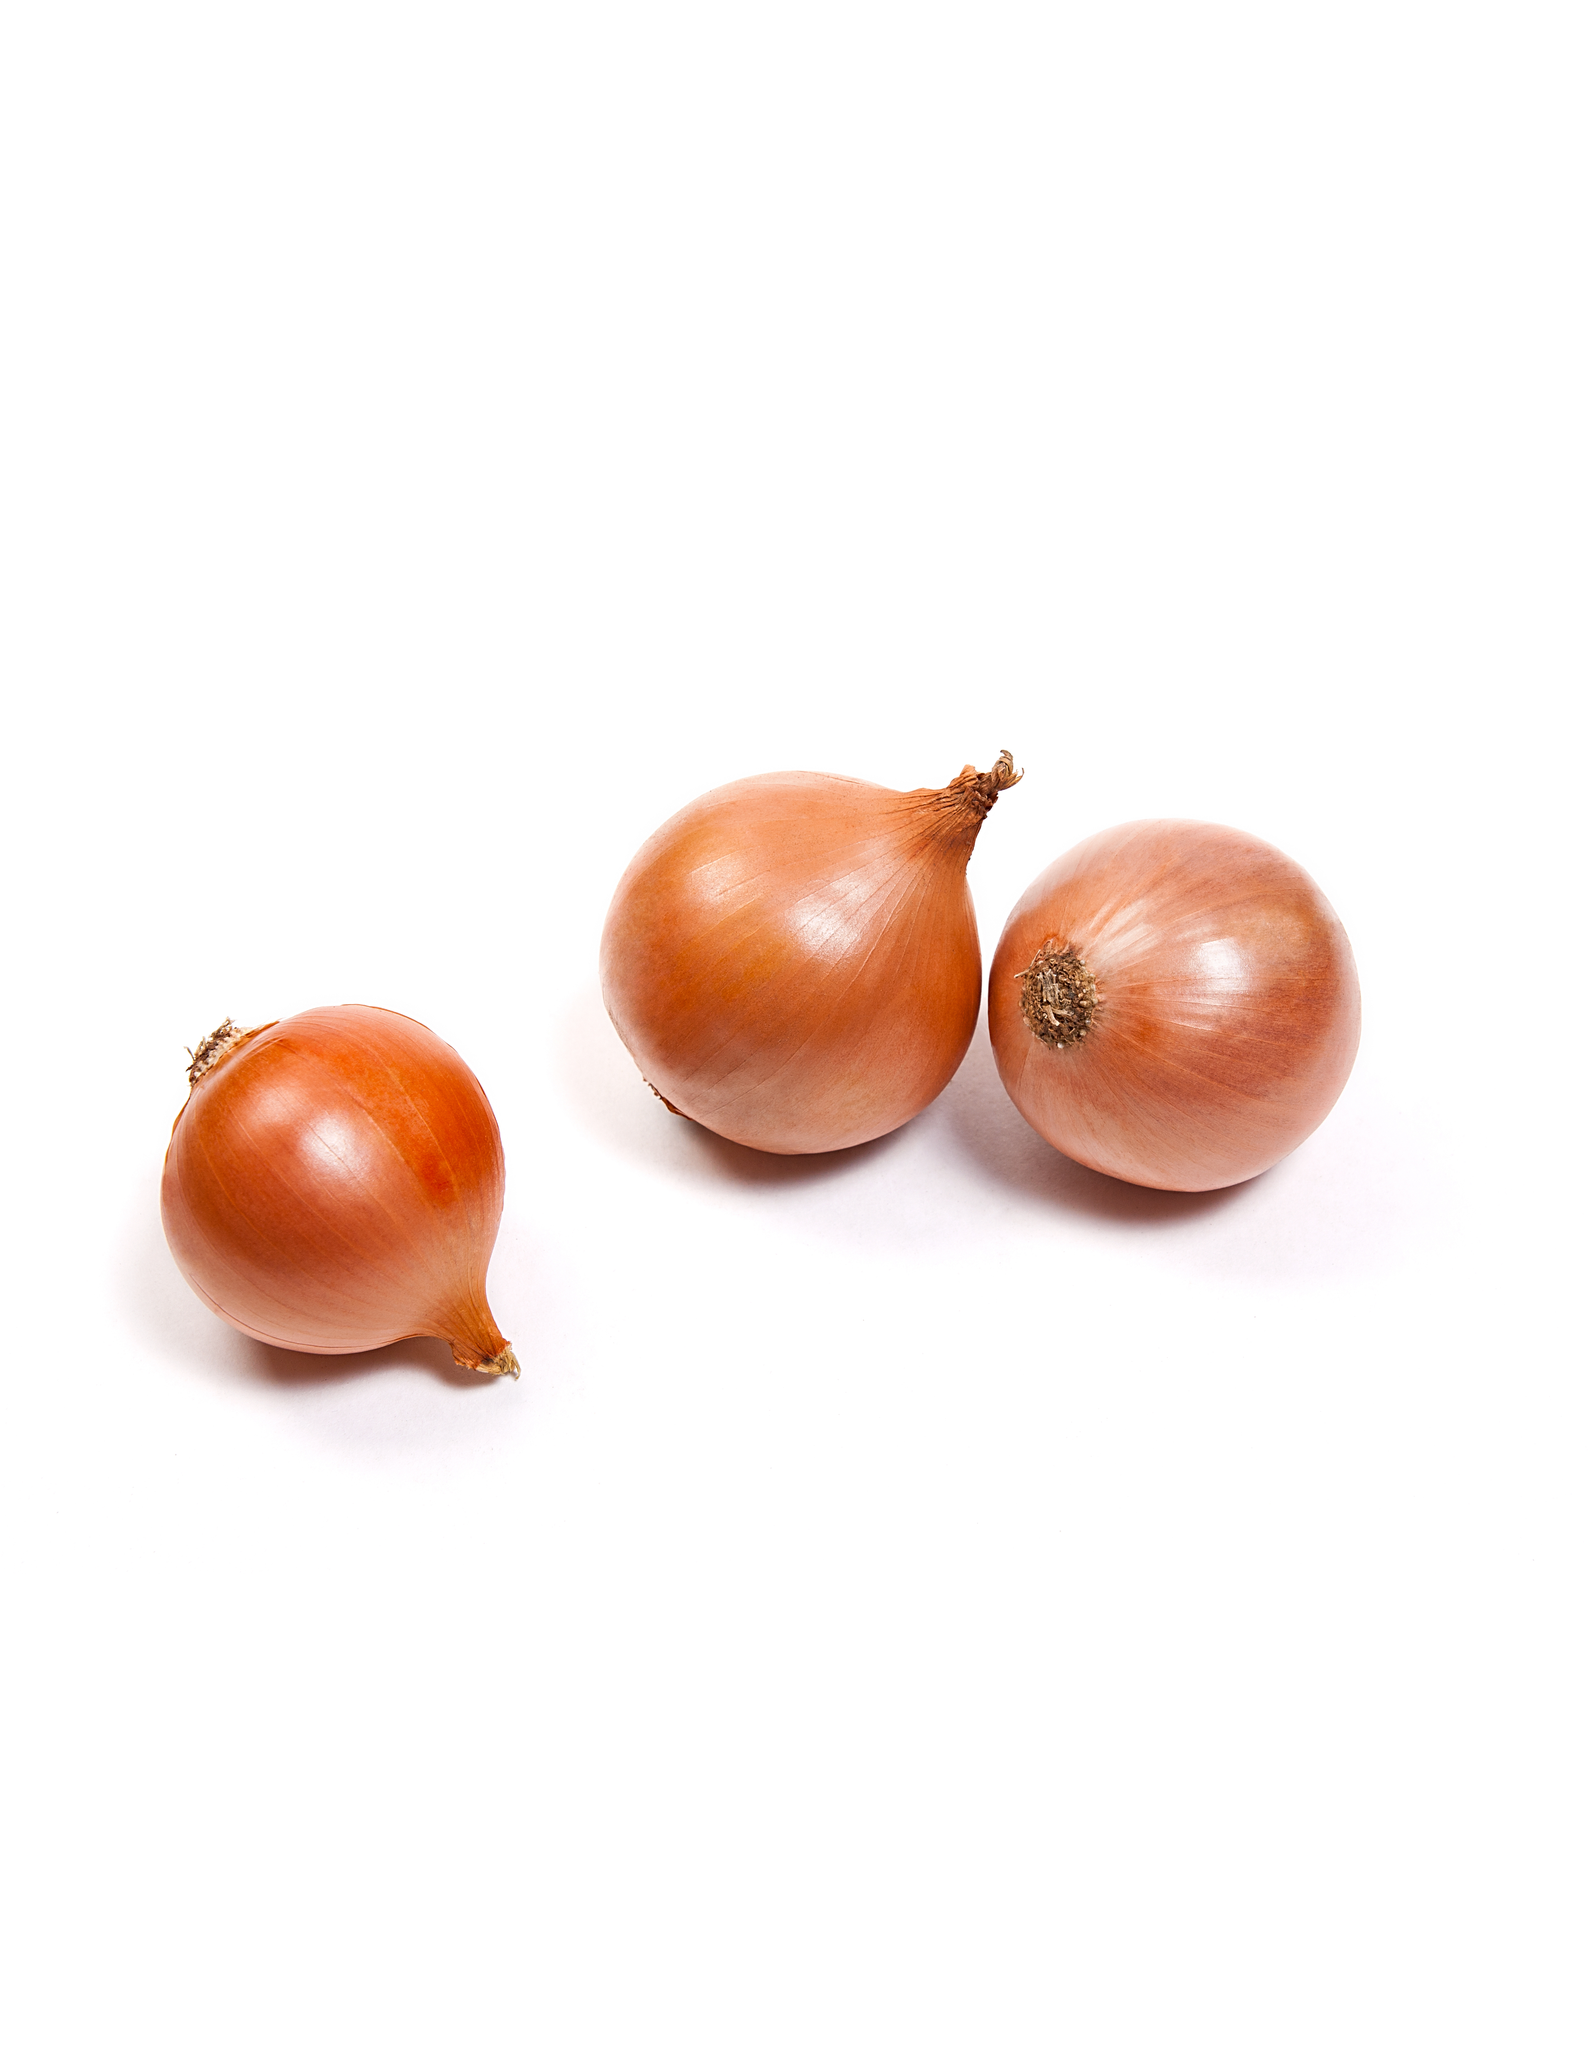 Dutch Onions (Hamburger Type)